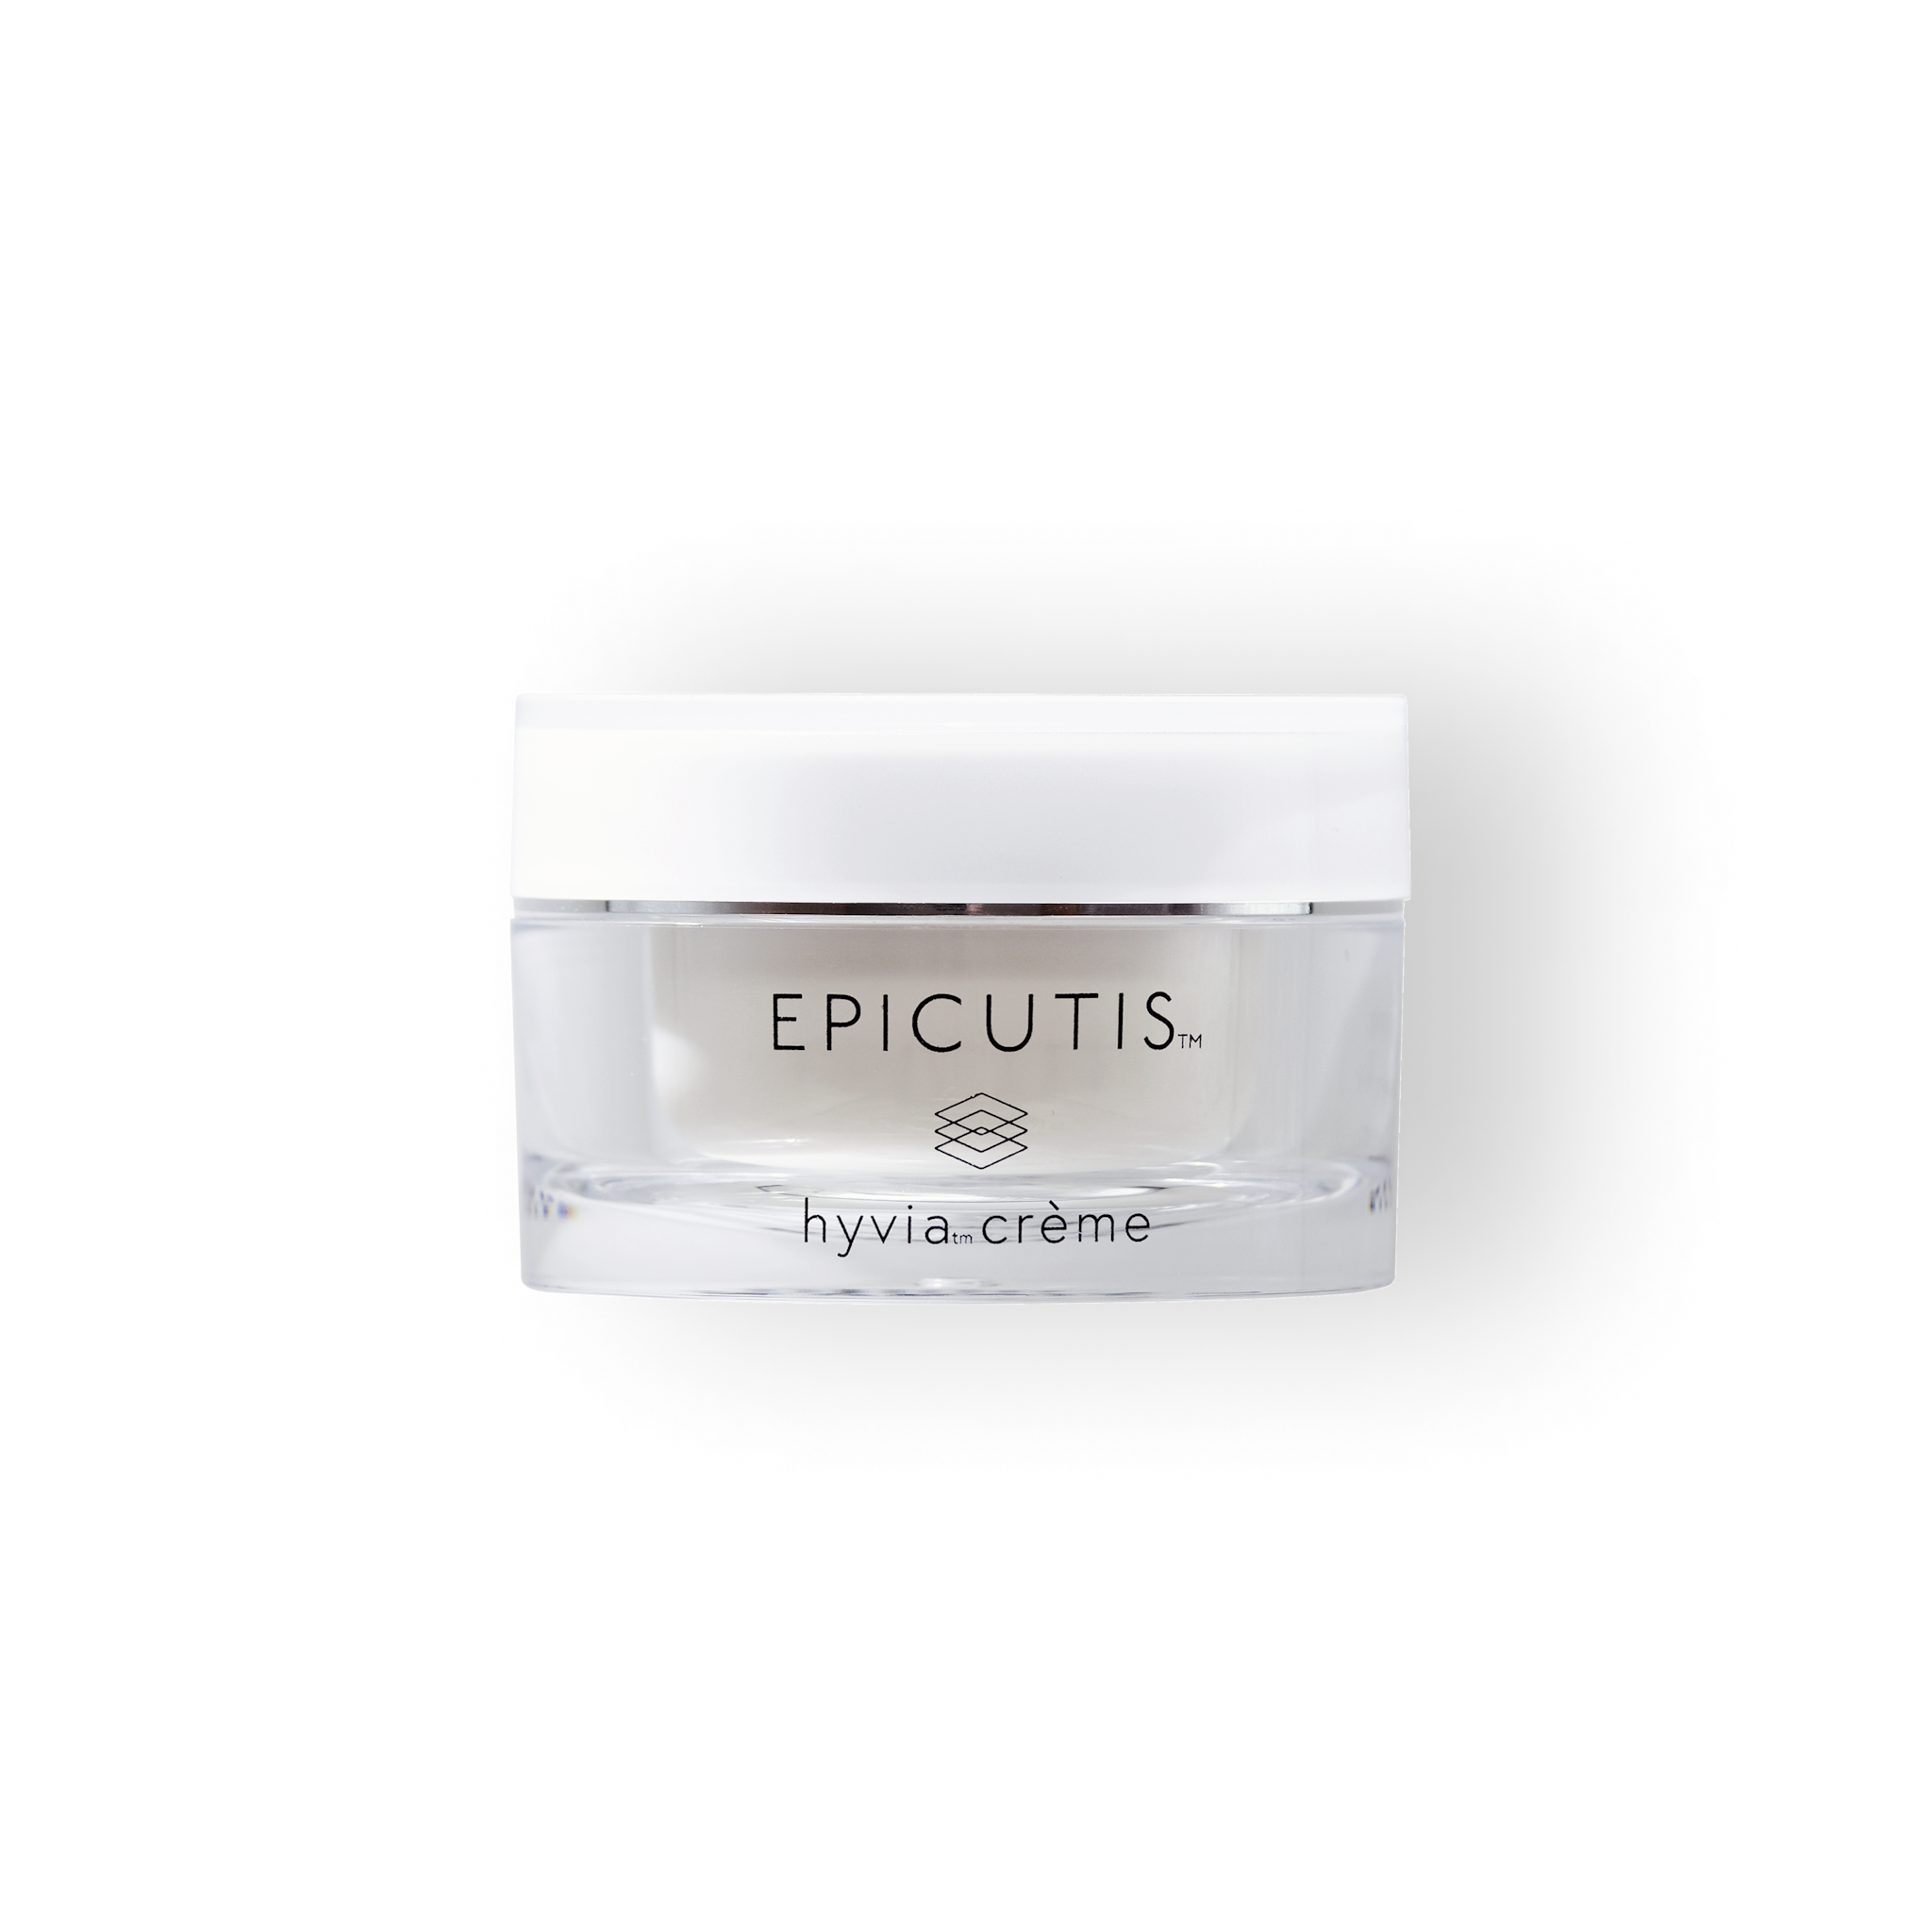 Picture of Epicutis product